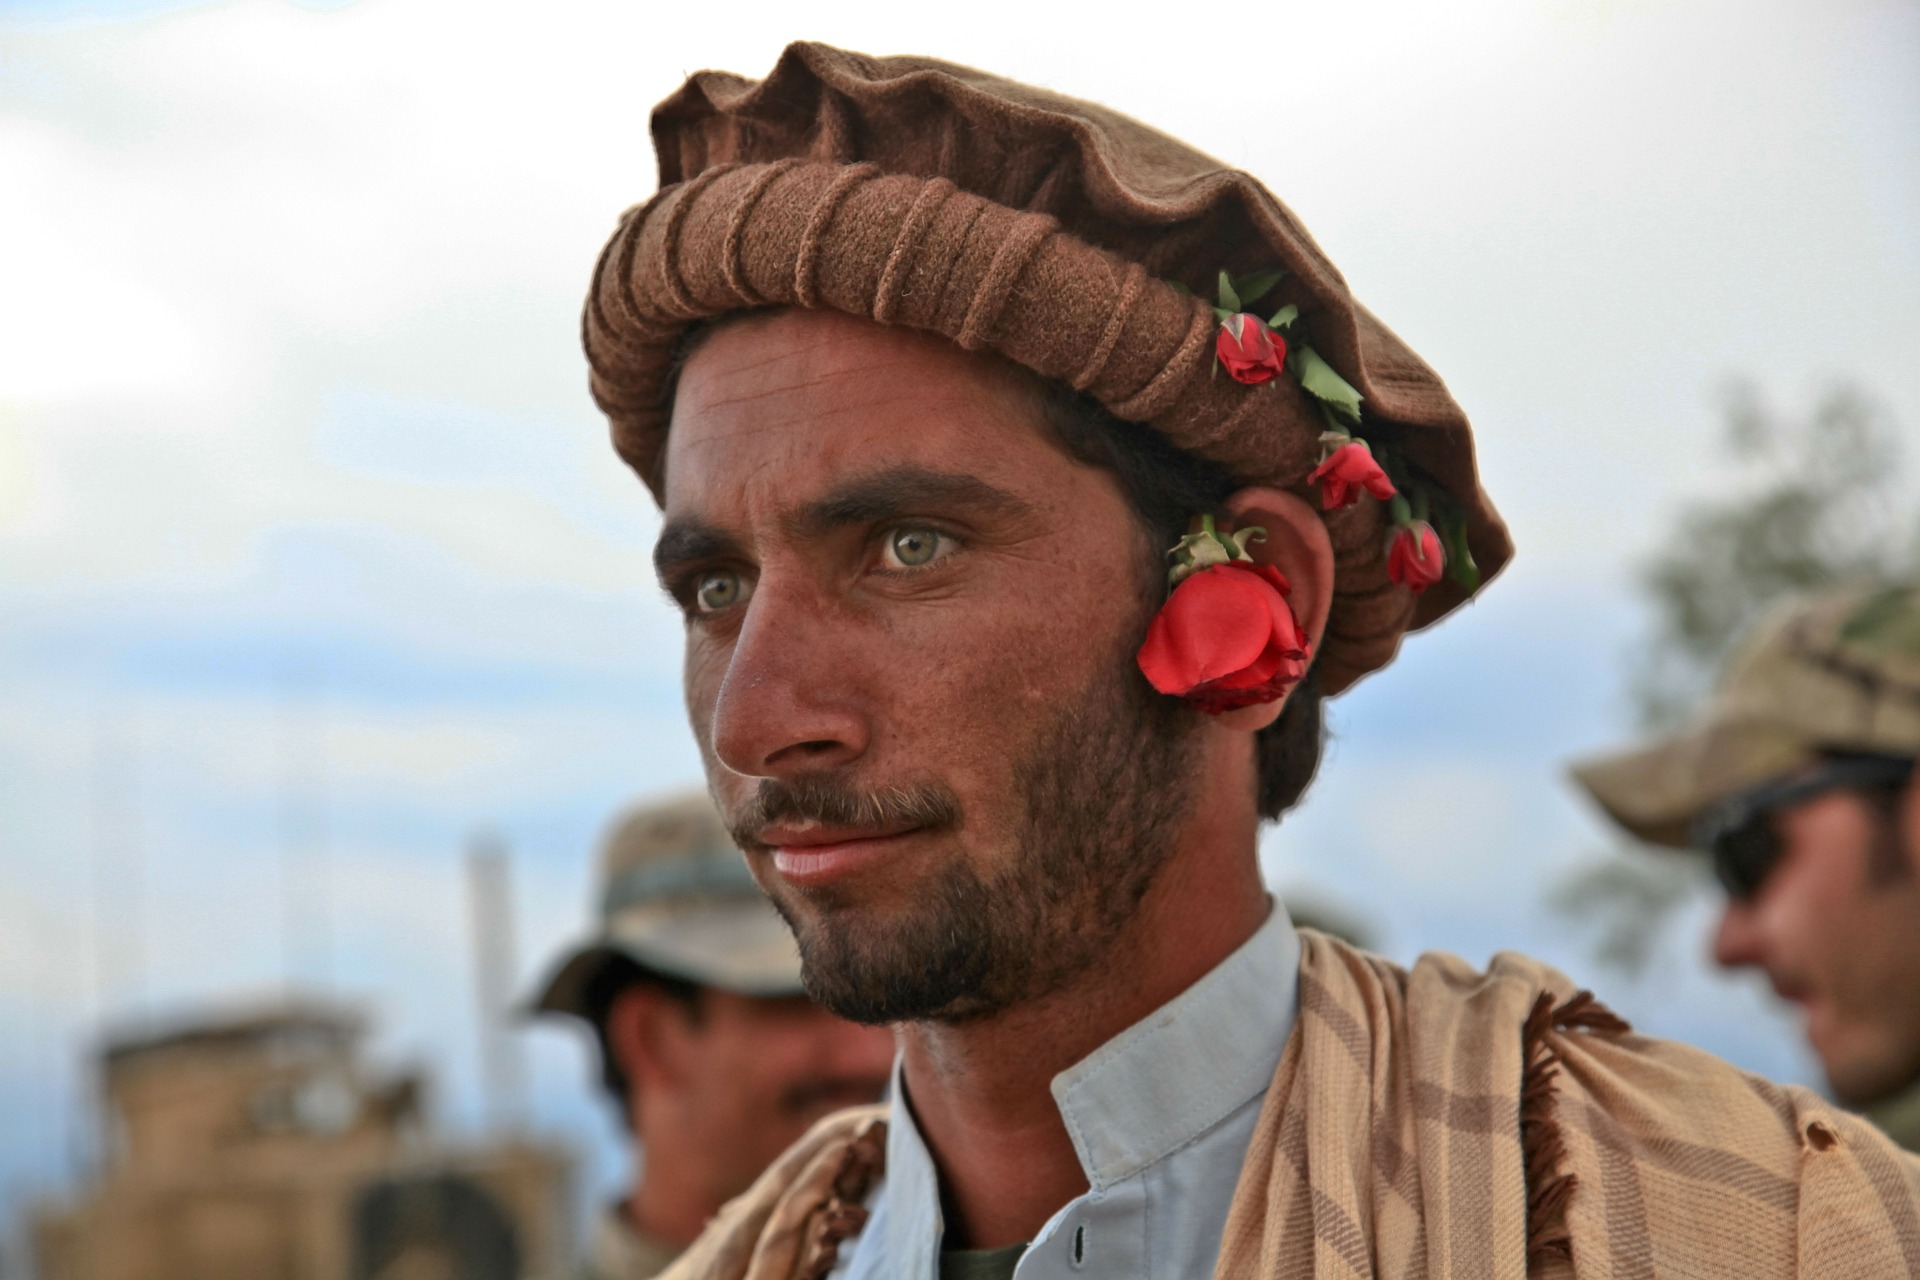 Шапка талибов